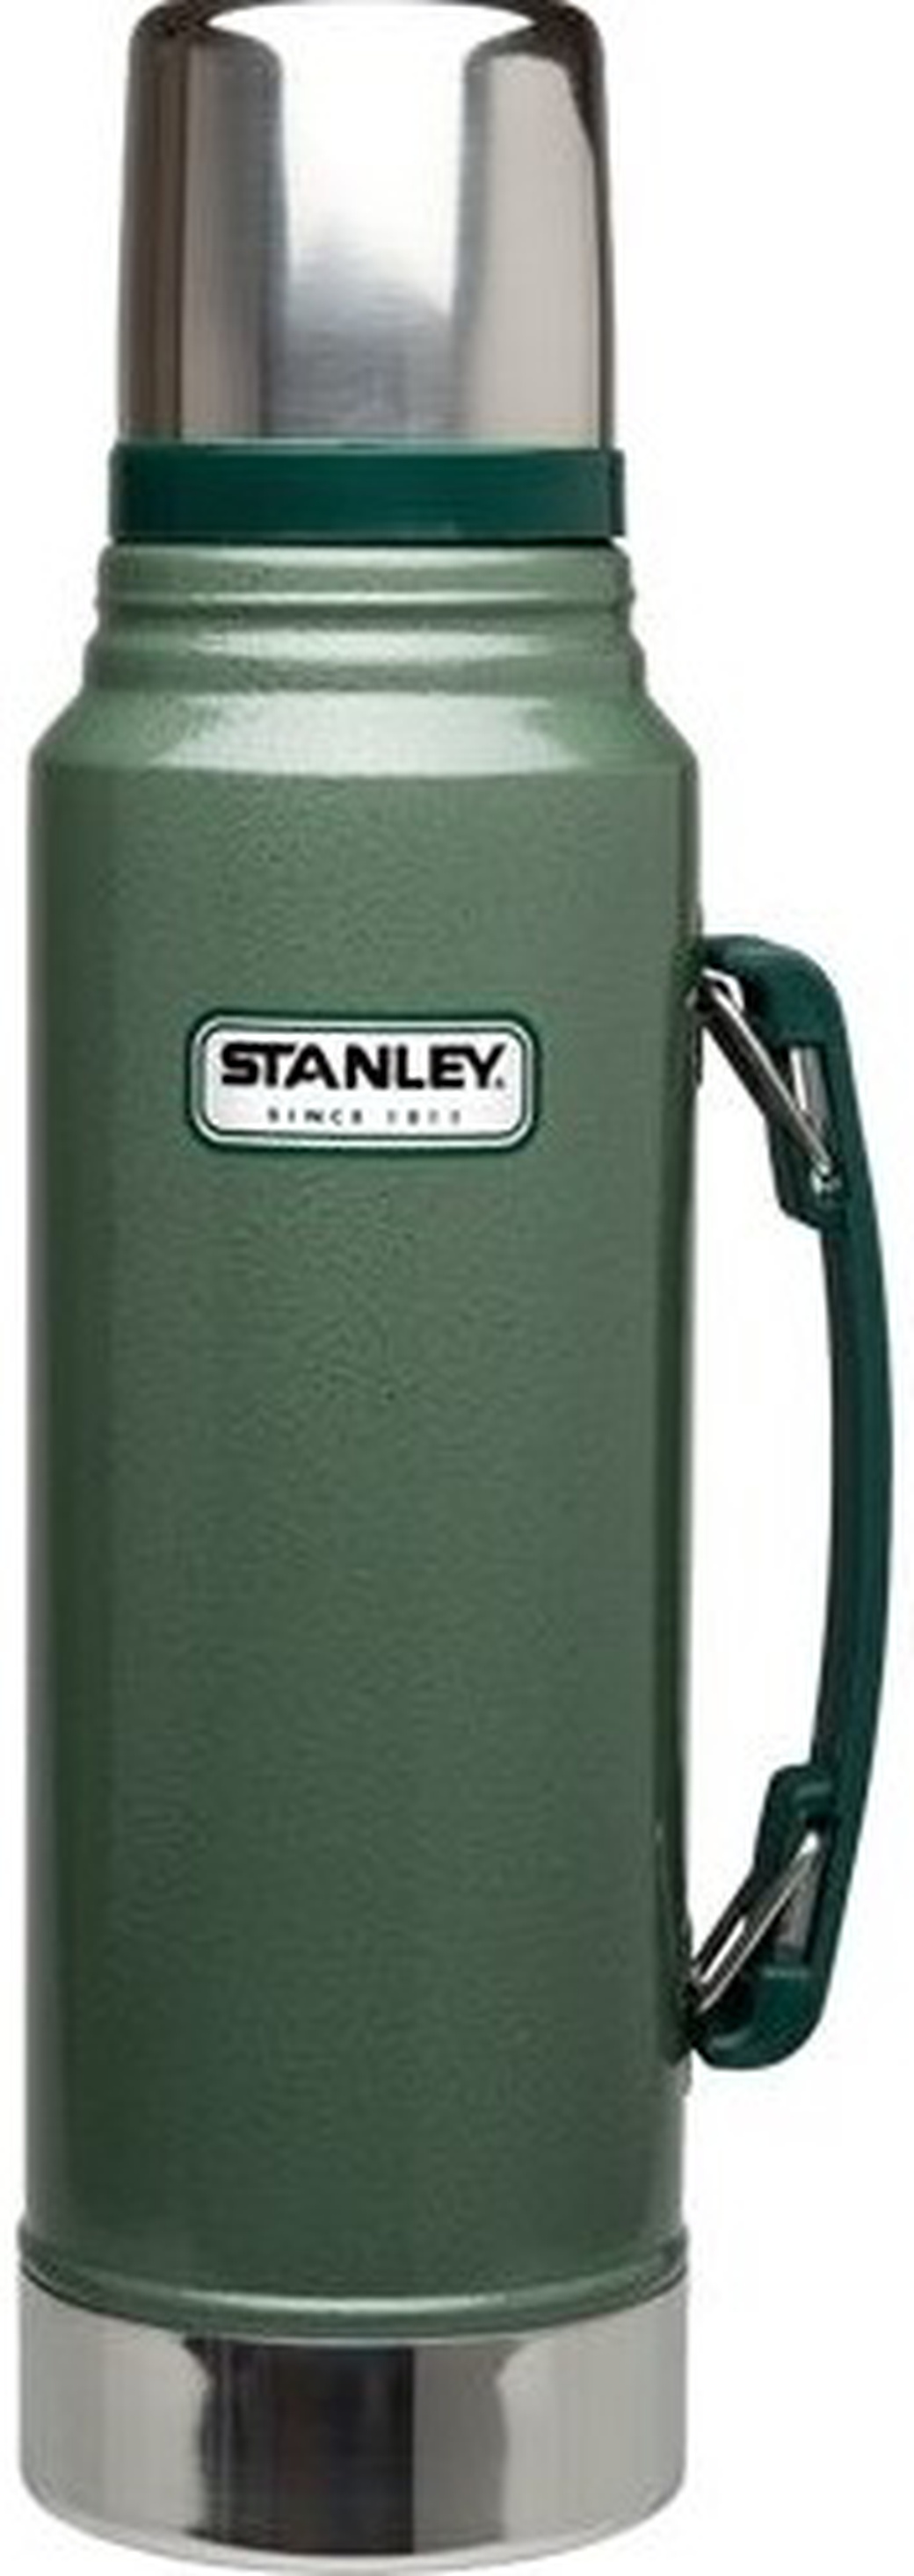 Термос Stanley Legendary Classic 1.9л. темно-зеленый/серебристый фото